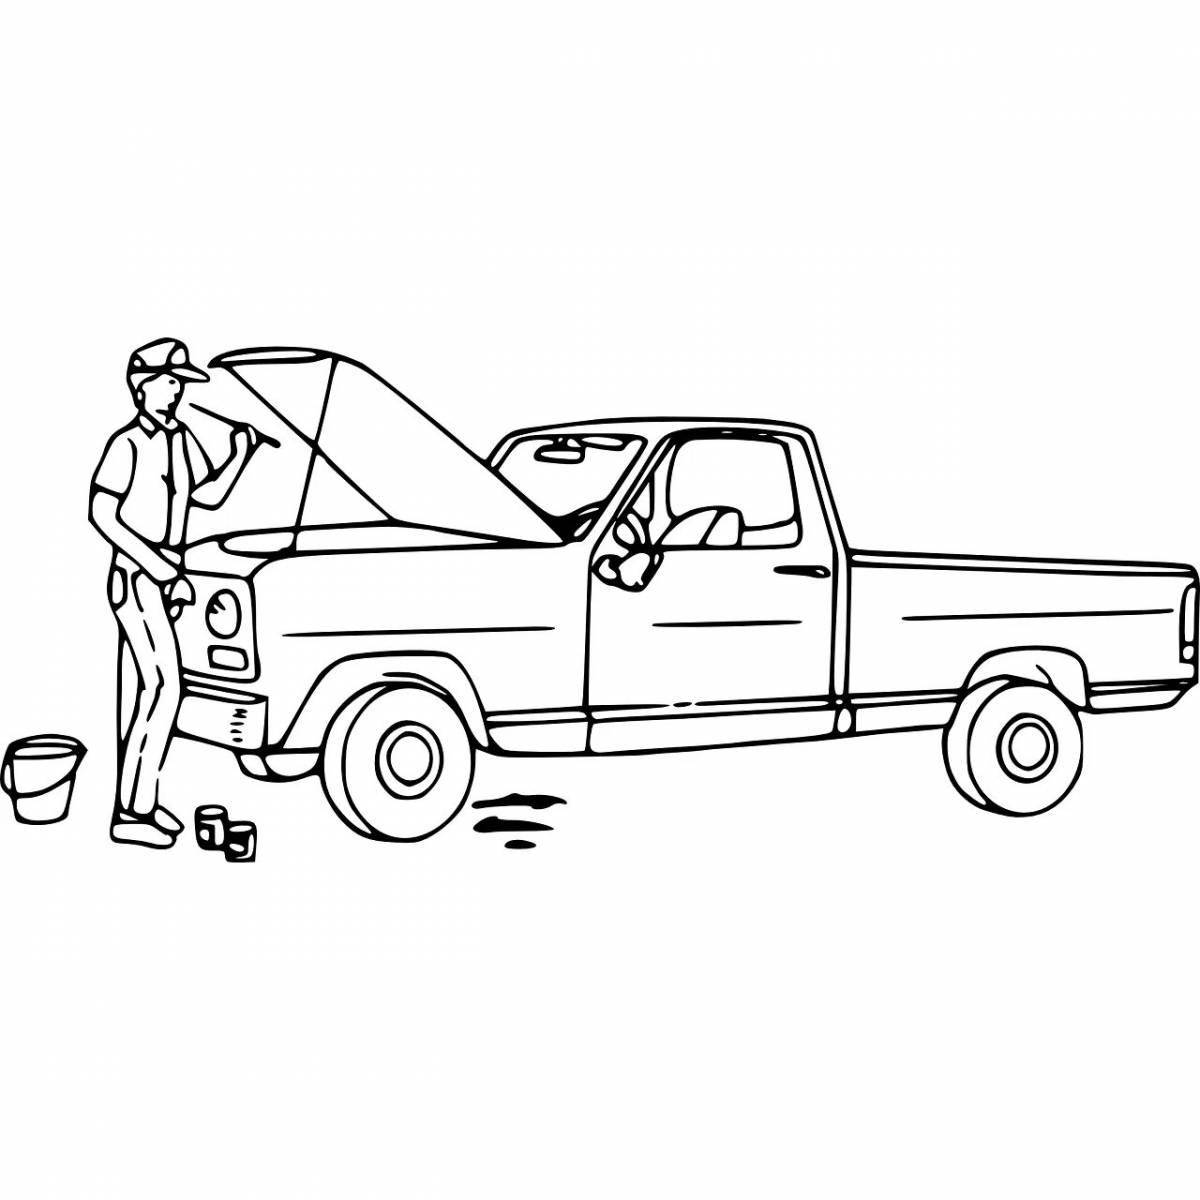 Coloring book joyful profession auto mechanic